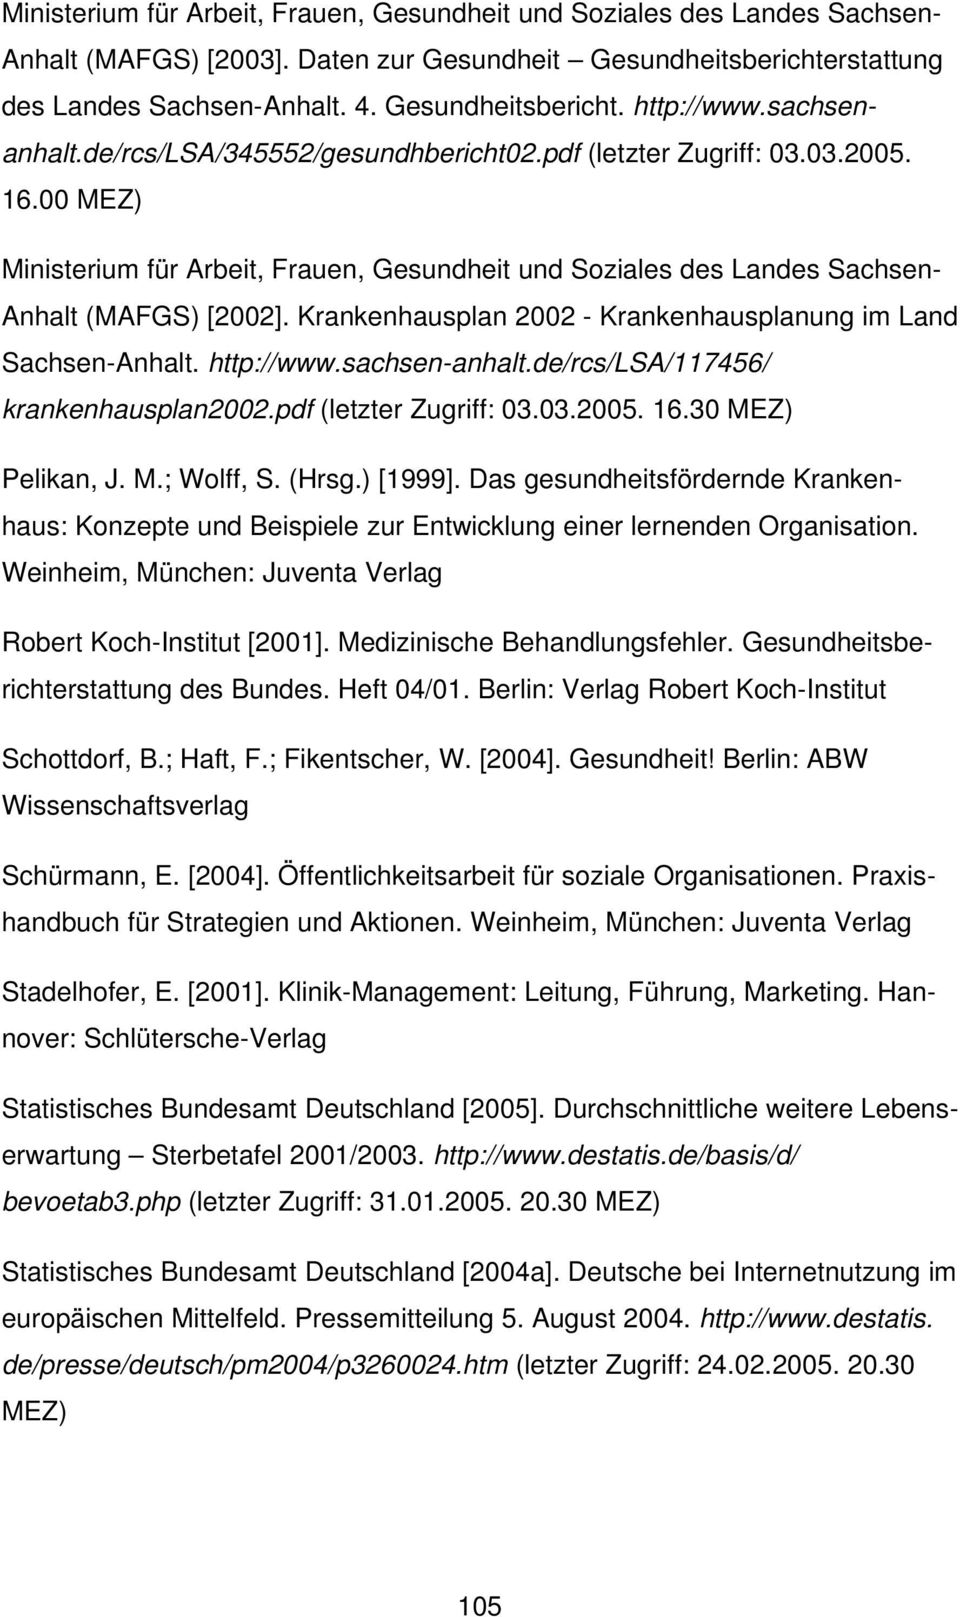 Krankenhausplan 2002 - Krankenhausplanung im Land Sachsen-Anhalt. http://www.sachsen-anhalt.de/rcs/lsa/117456/ krankenhausplan2002.pdf (letzter Zugriff: 03.03.2005. 16.30 MEZ) Pelikan, J. M.; Wolff, S.